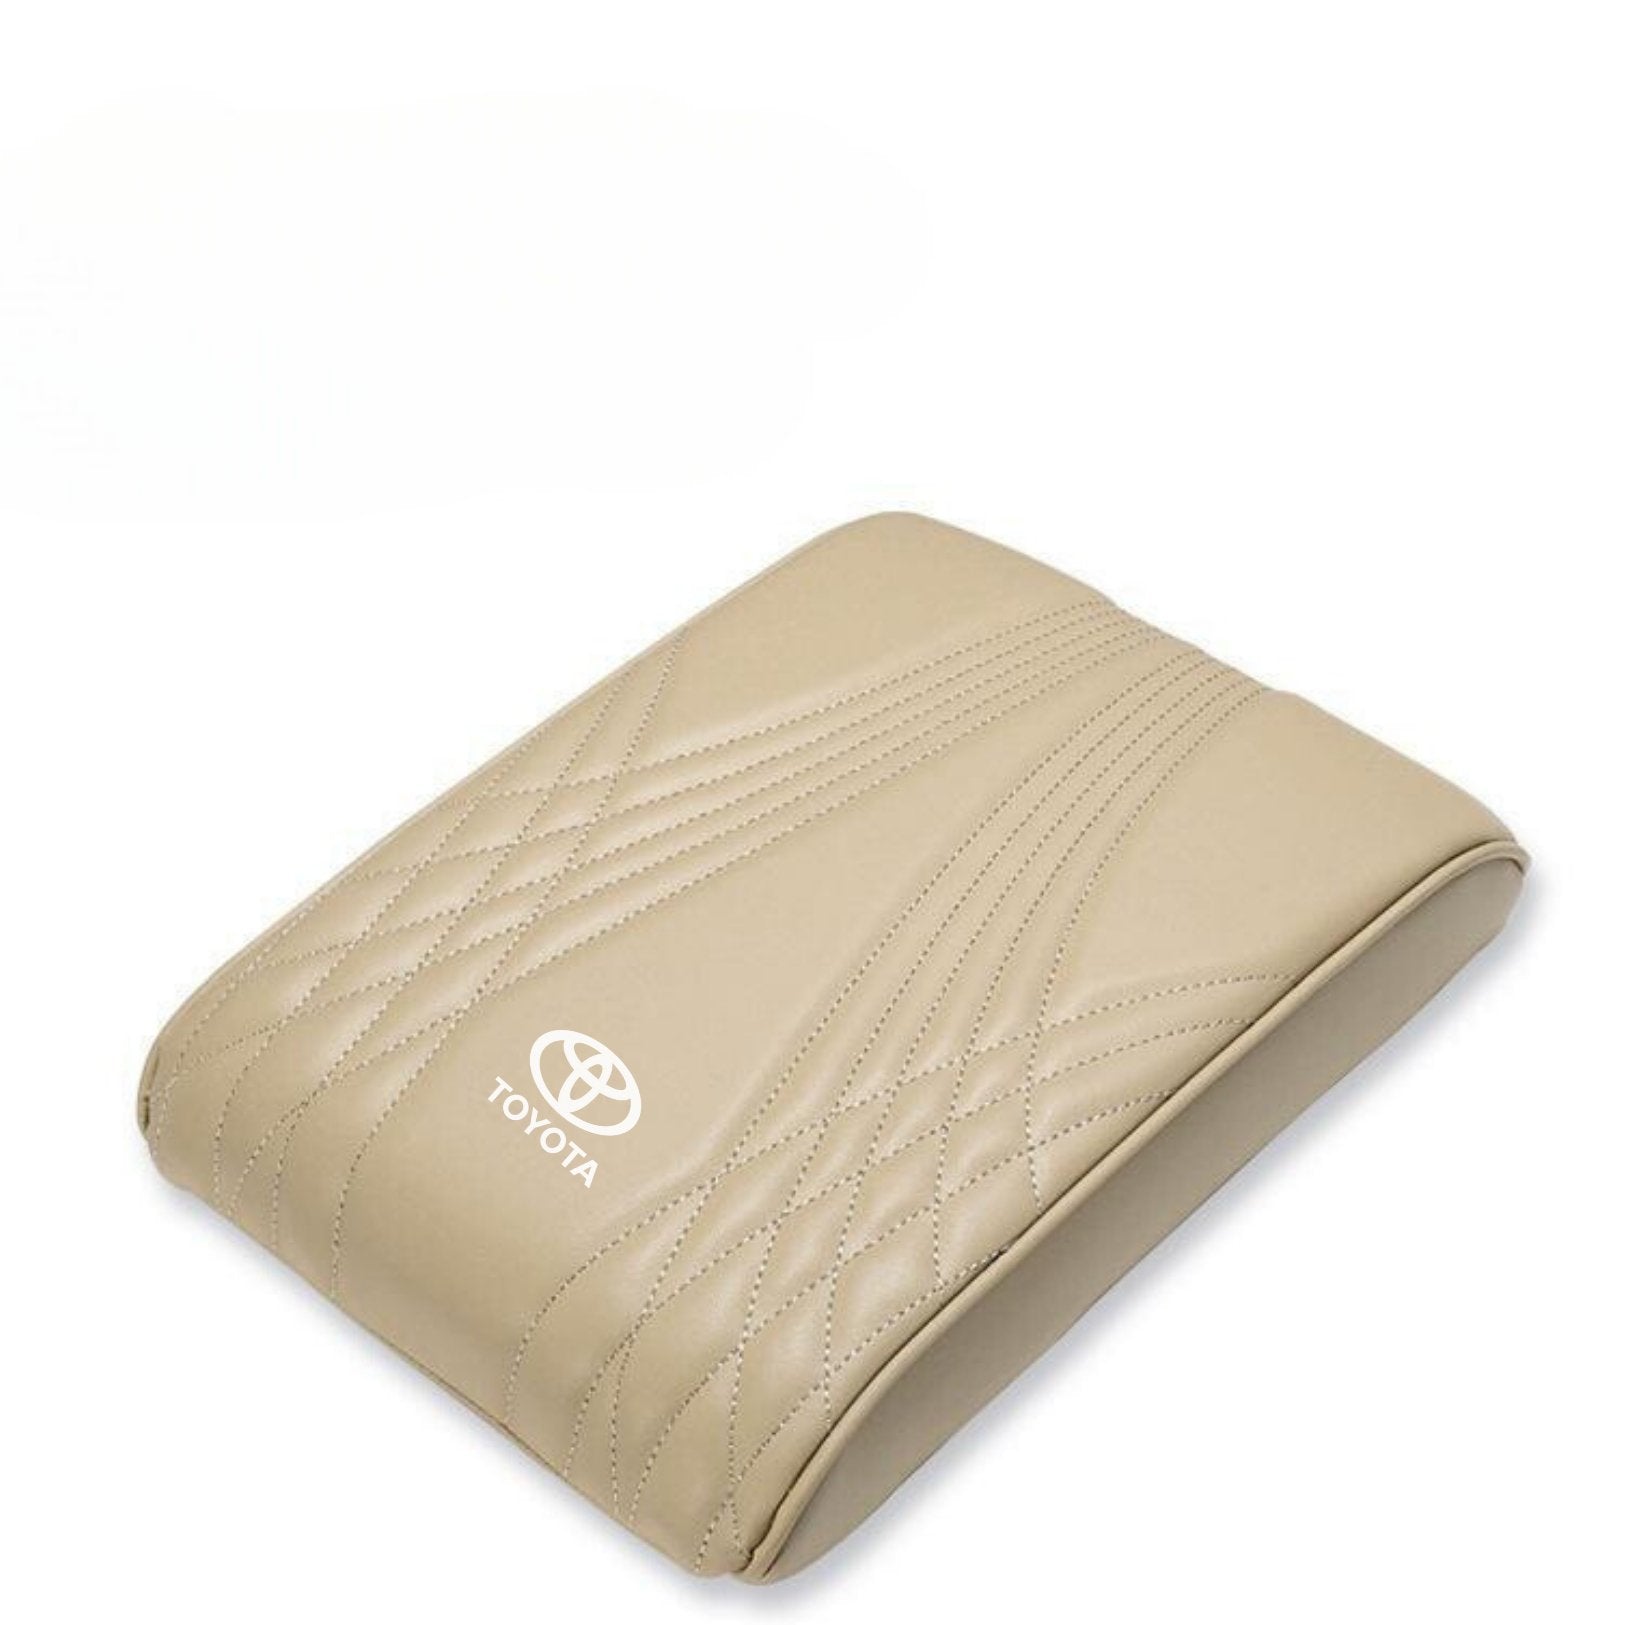 Car Logo Armrest Cushion - 50% OFF - Home Essentials Store